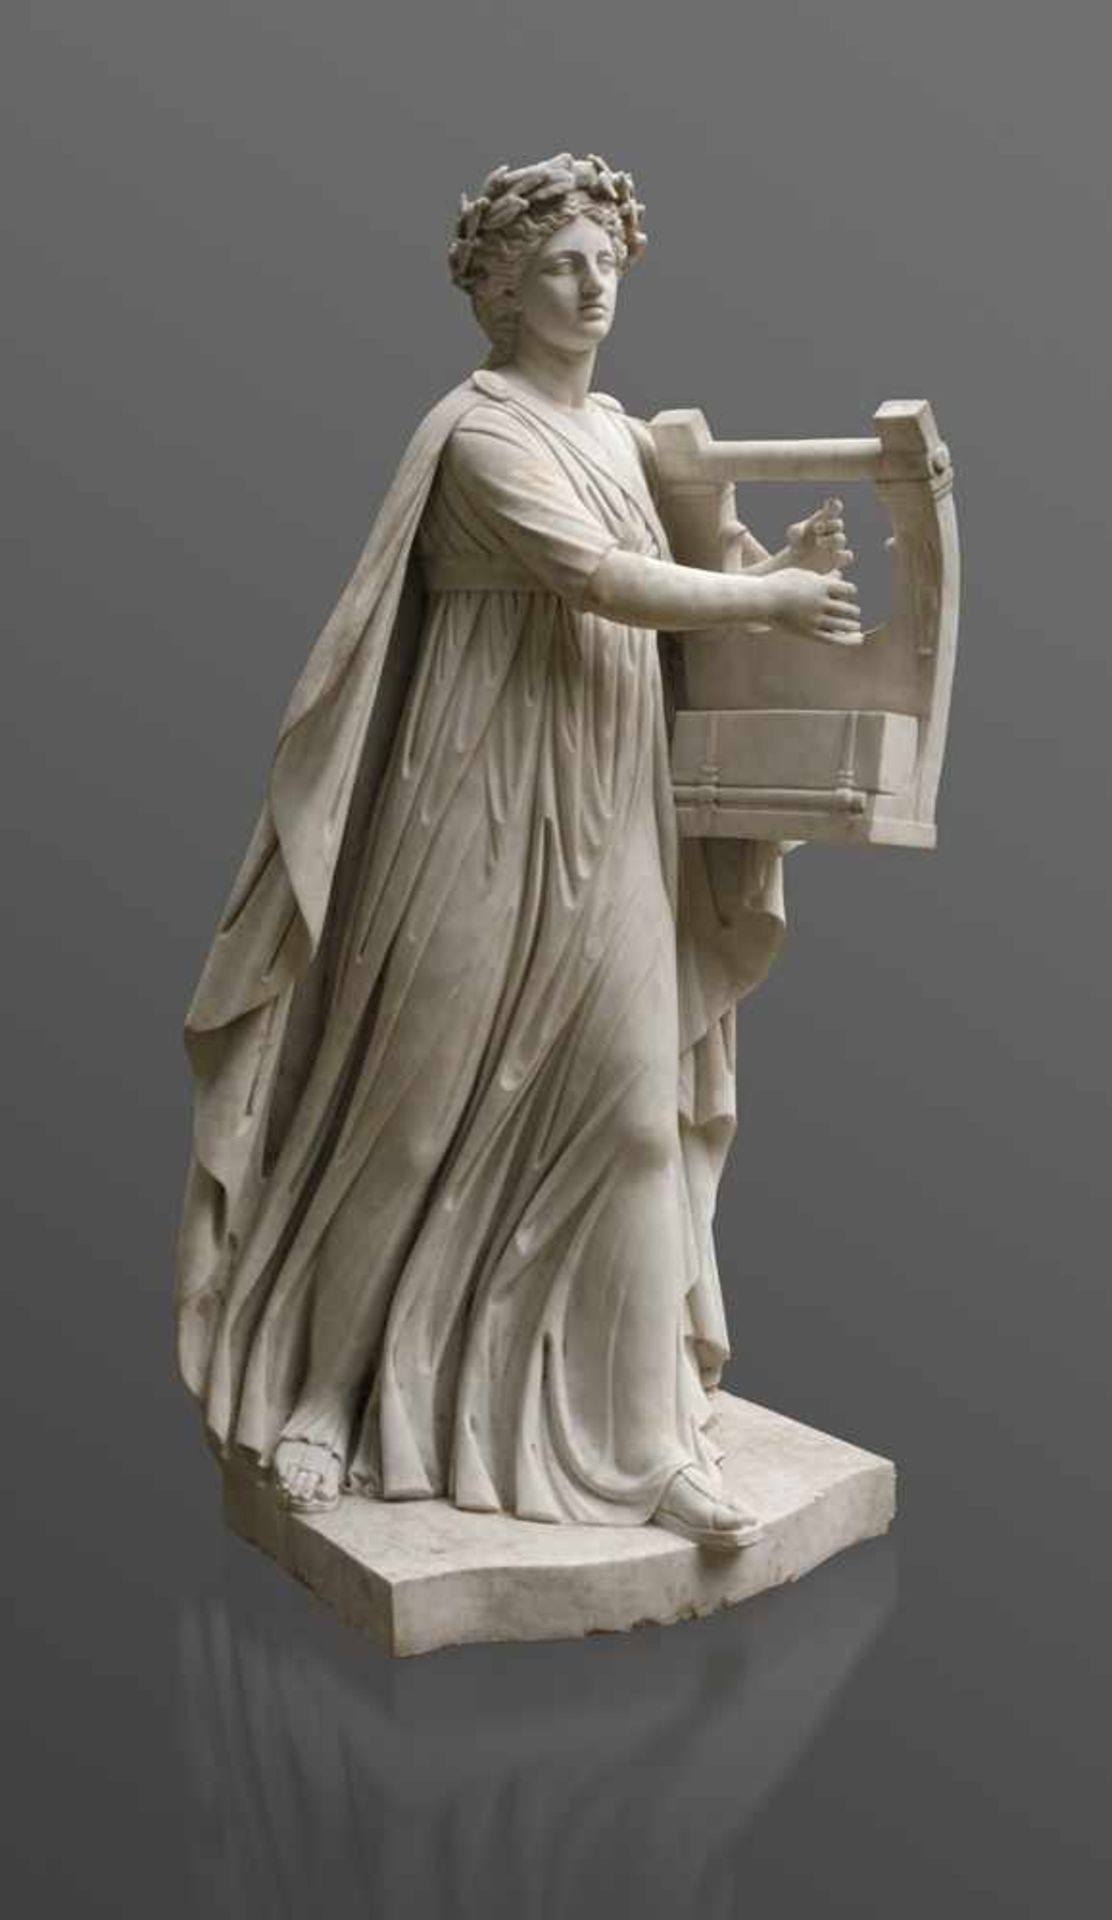 Antonio Frilli, lebensgroße Statue Apolloum 1900, aus weißem Carrara-Marmor gehauen, auf dem